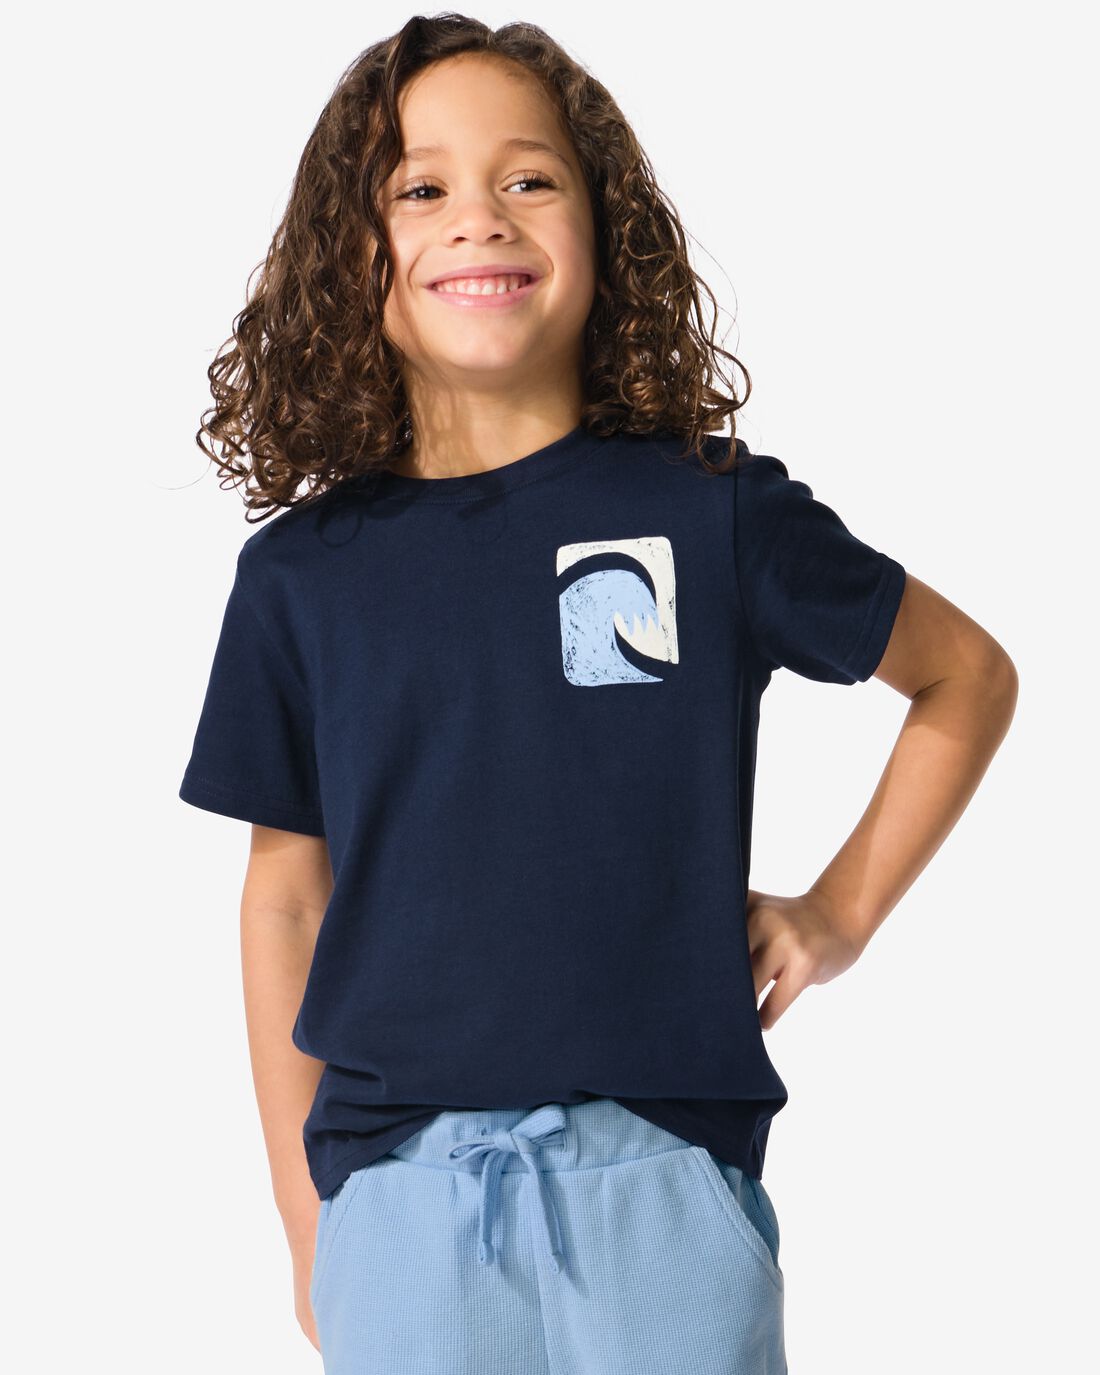 HEMA Kinder T-shirt Eiland 2 Stuks Blauw (blauw)